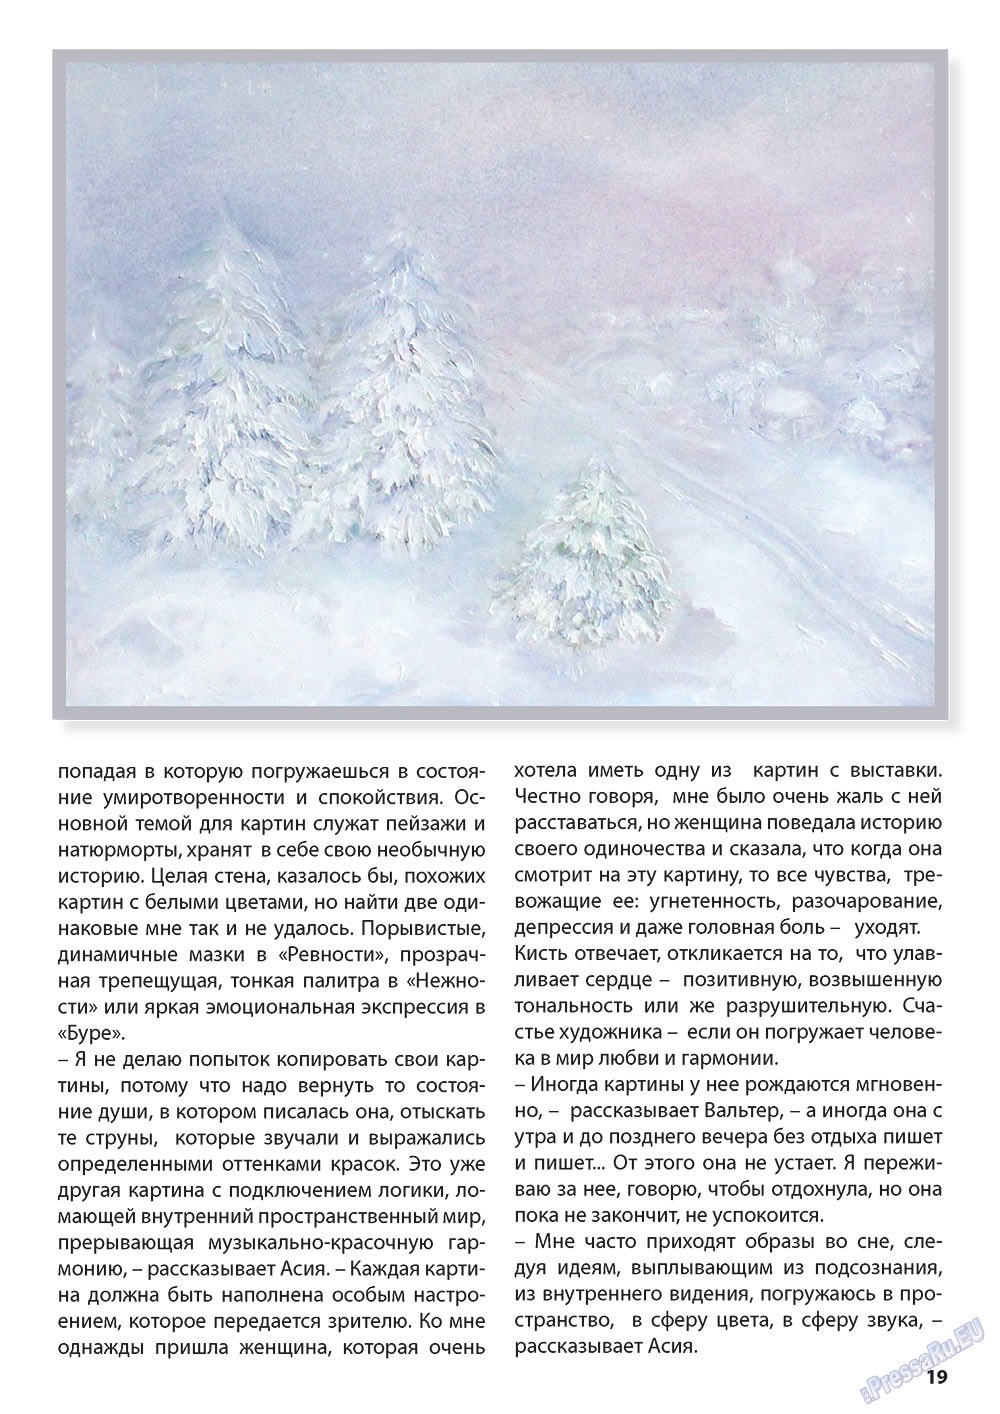 Wadim, журнал. 2012 №10 стр.19